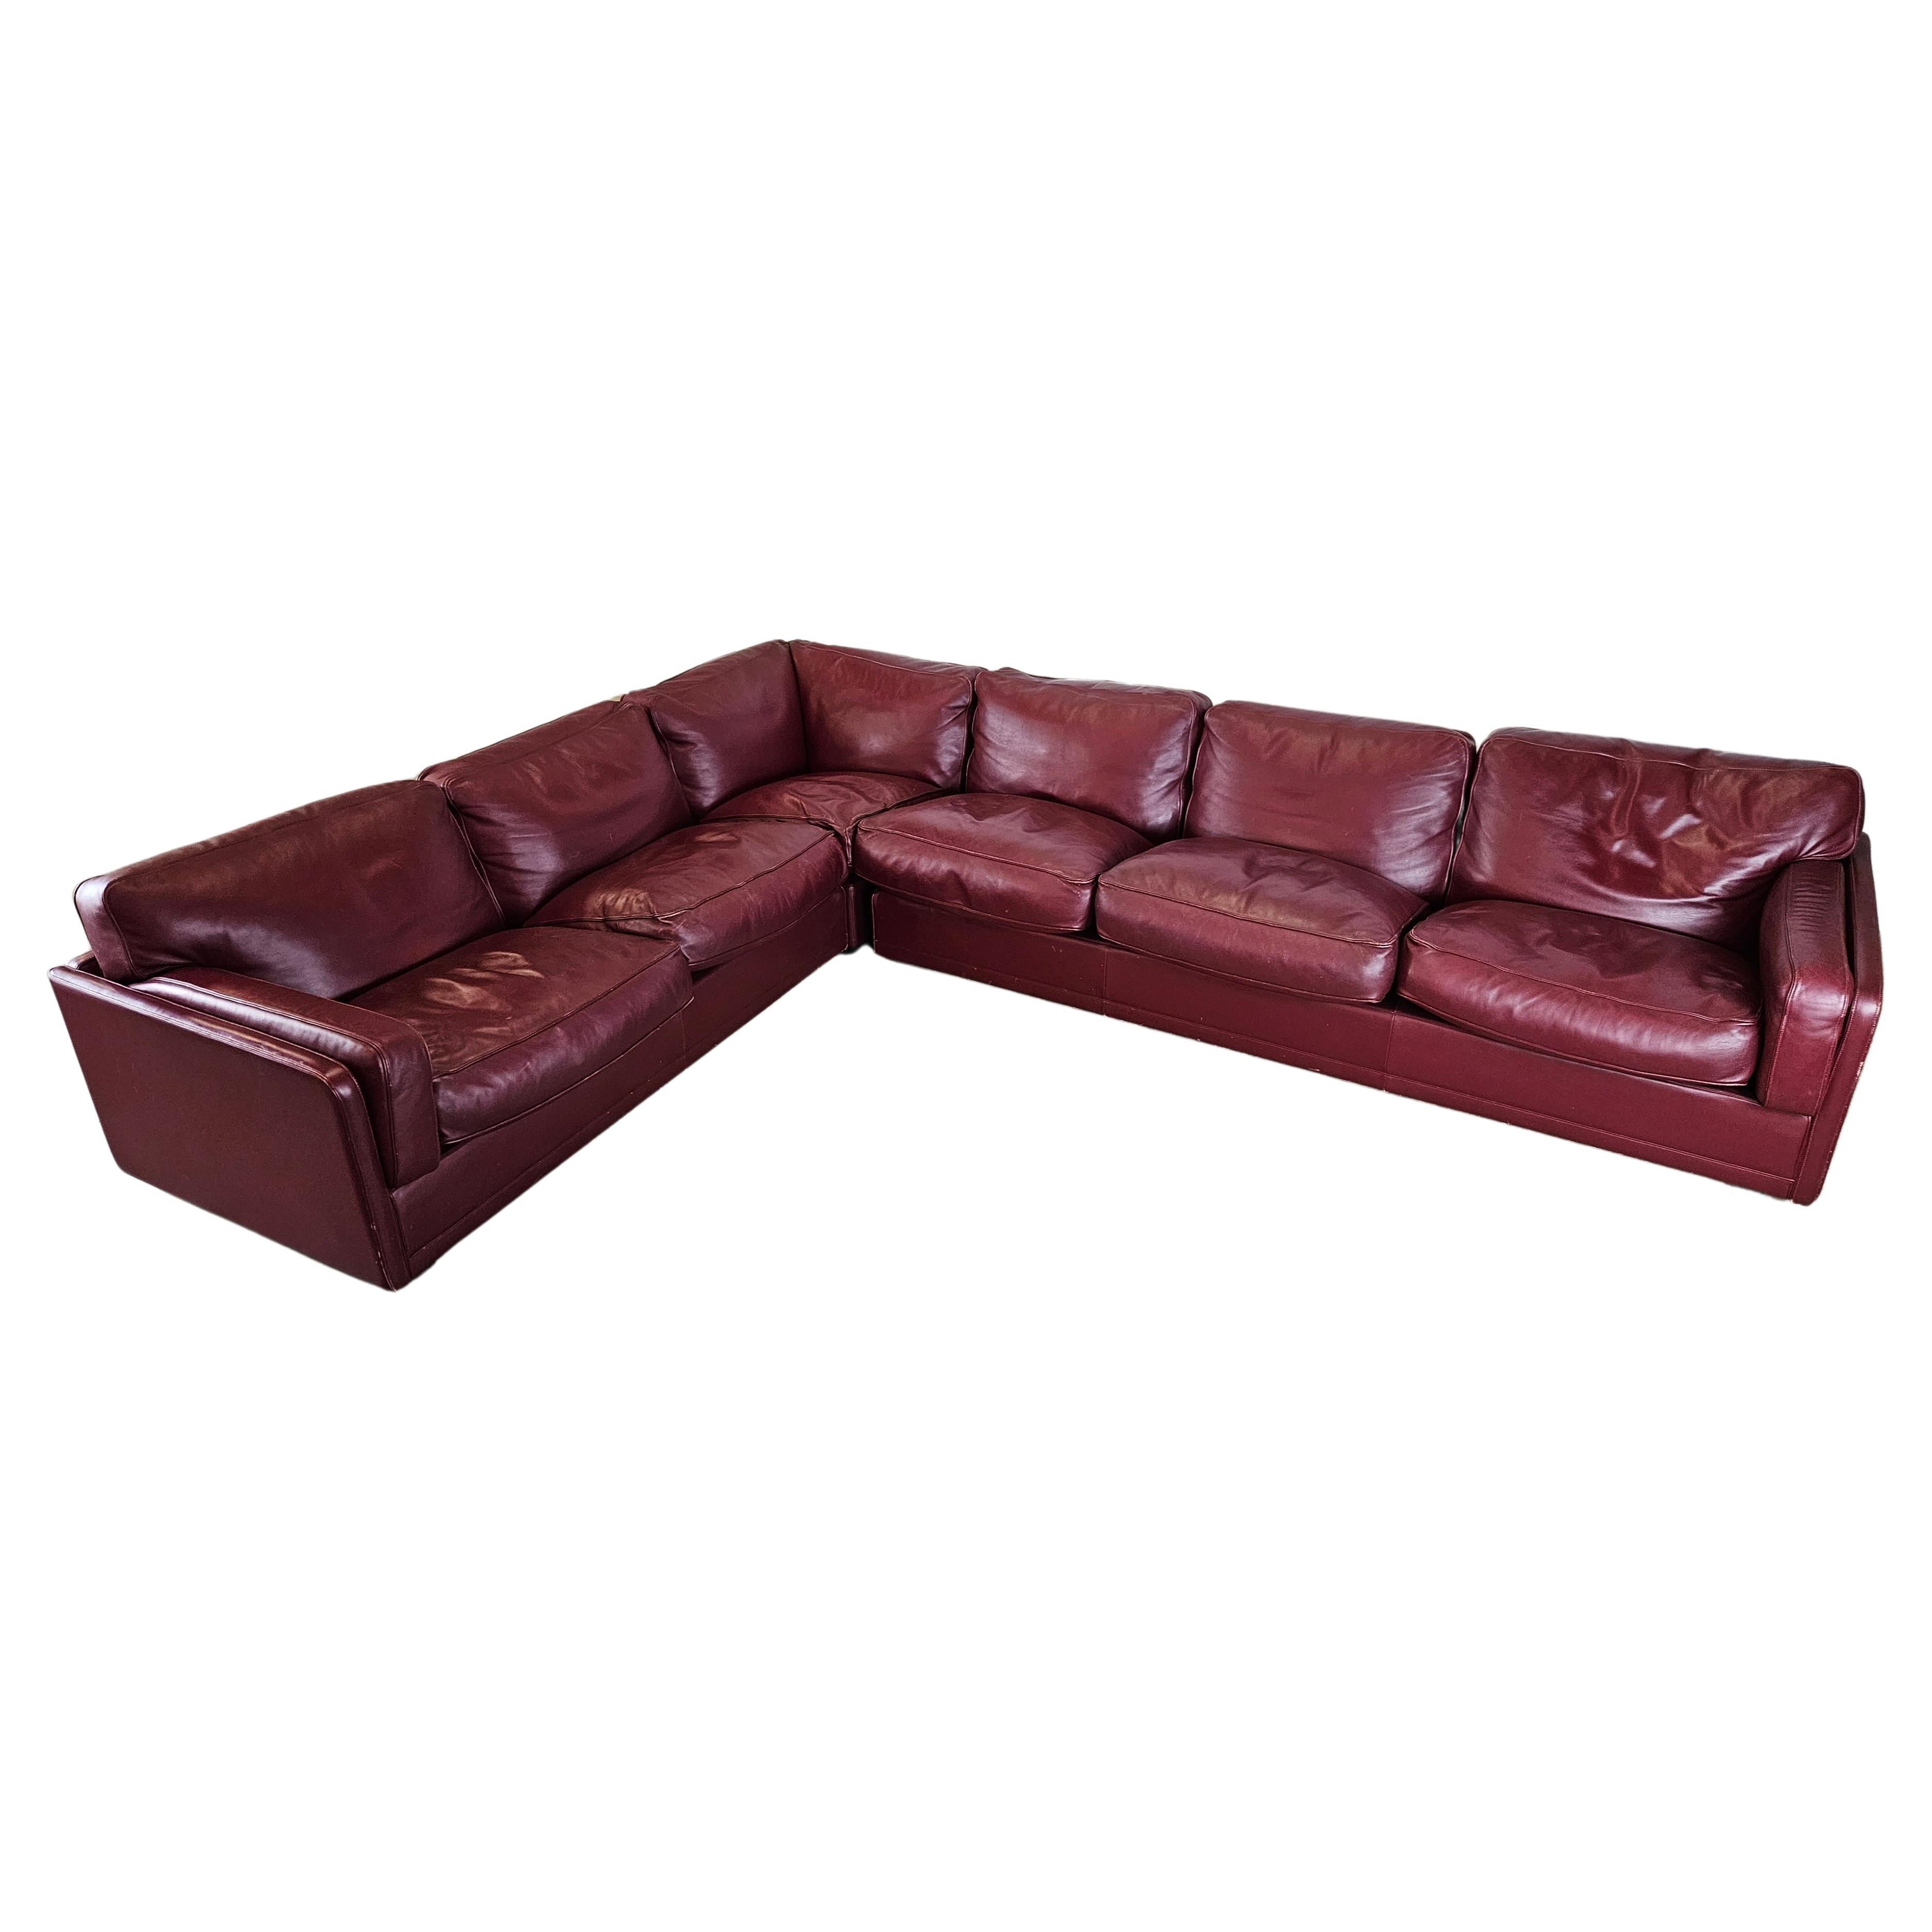 Socrates modular leather sofa by Poltrona Frau, 1970s For Sale